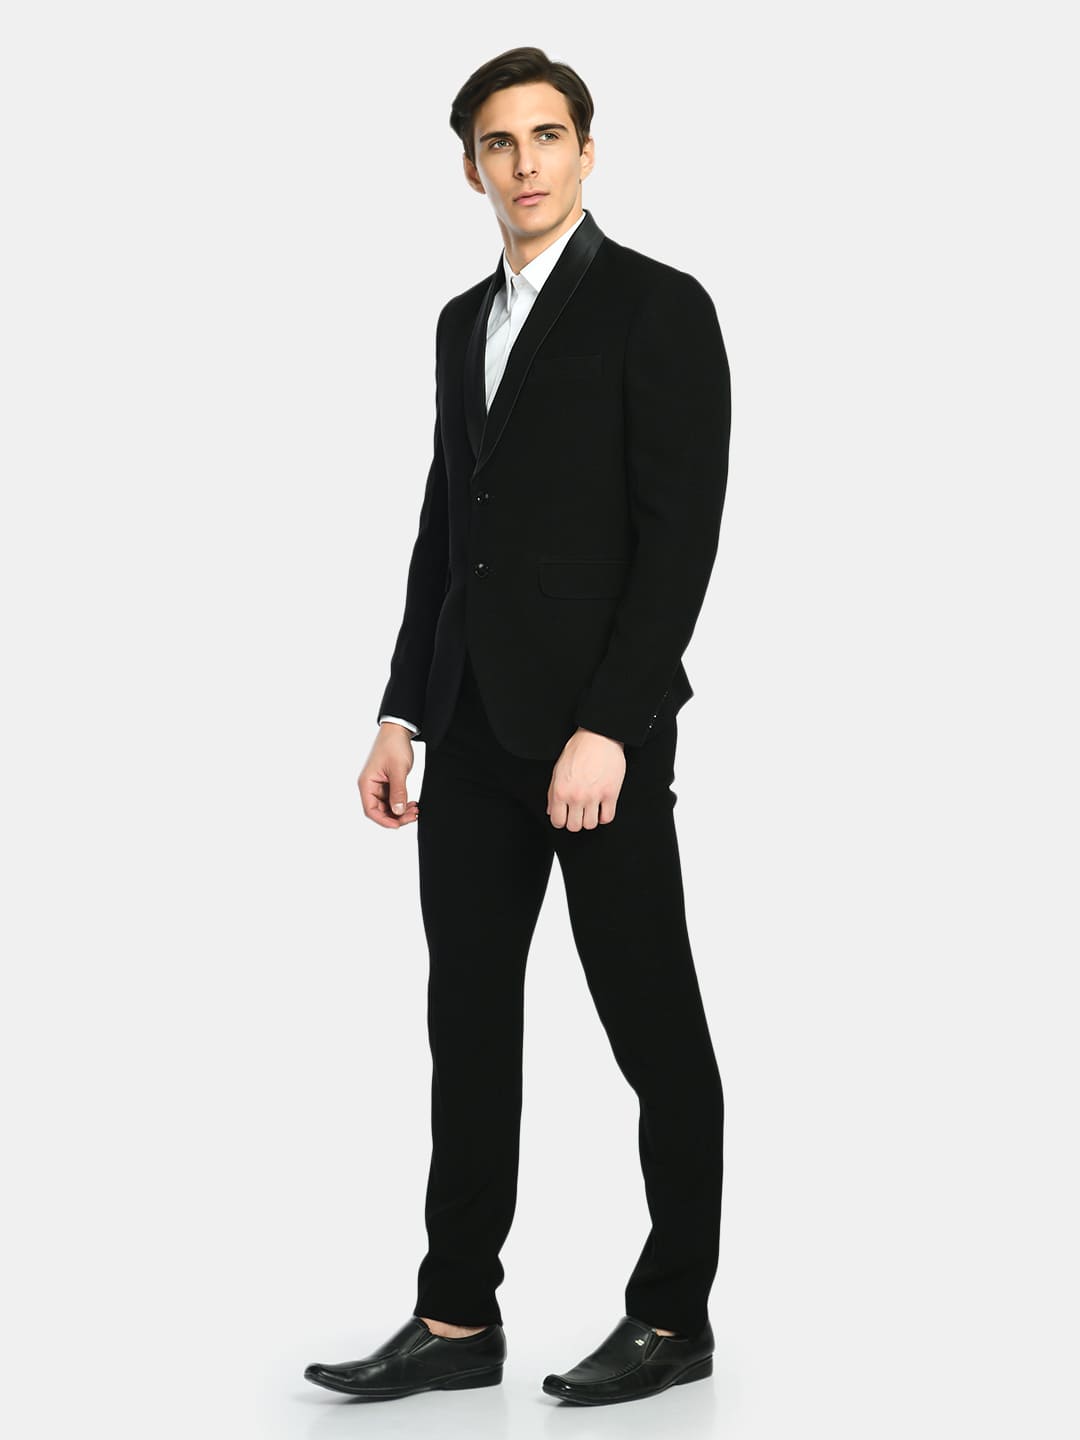 Flaunt in Bold, Black Tuxedo Suit